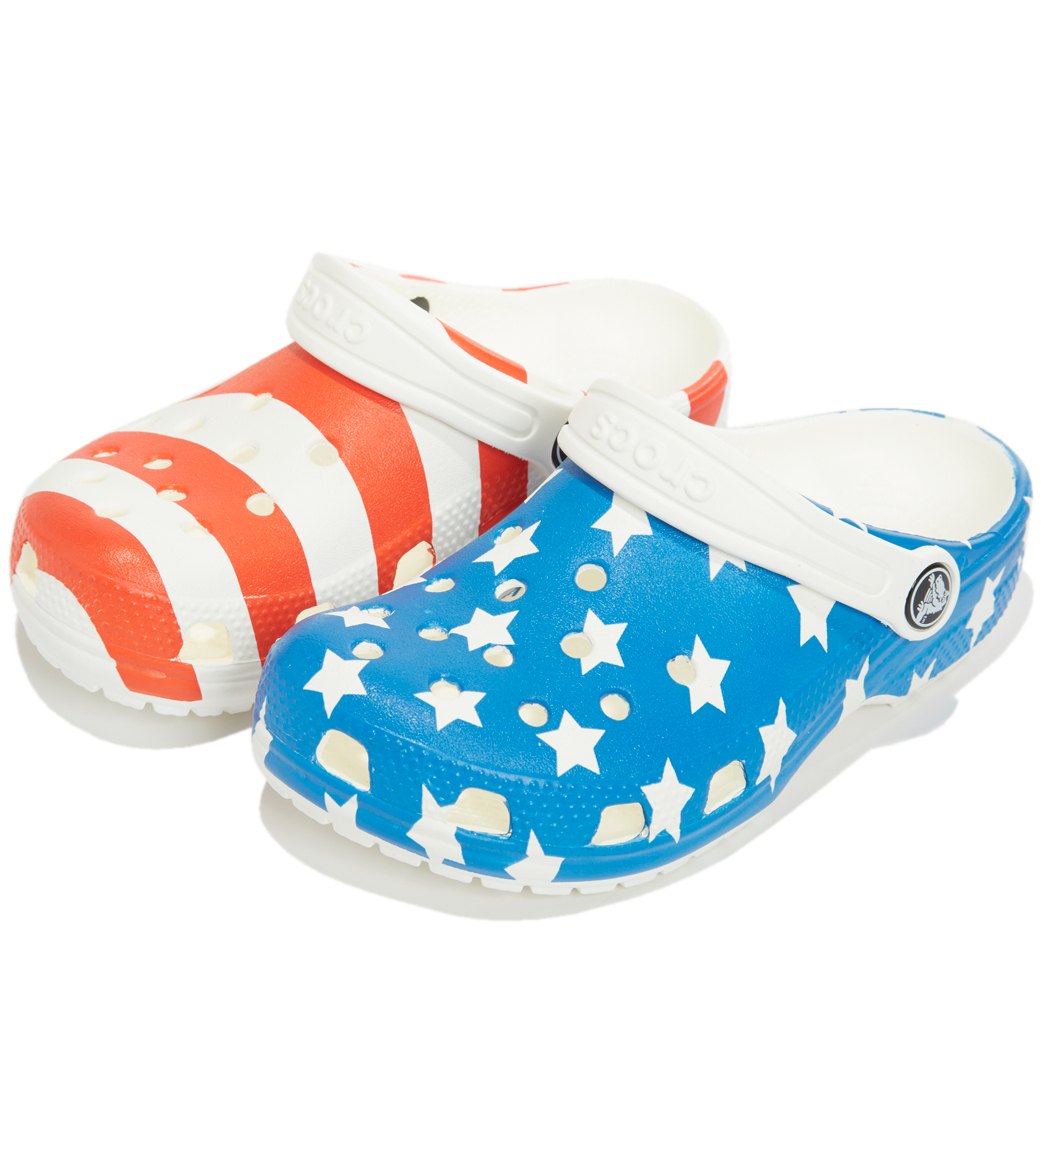 Crocs Kids Classic American Flag Clogs - Red/White/Blue 4 - Swimoutlet.com